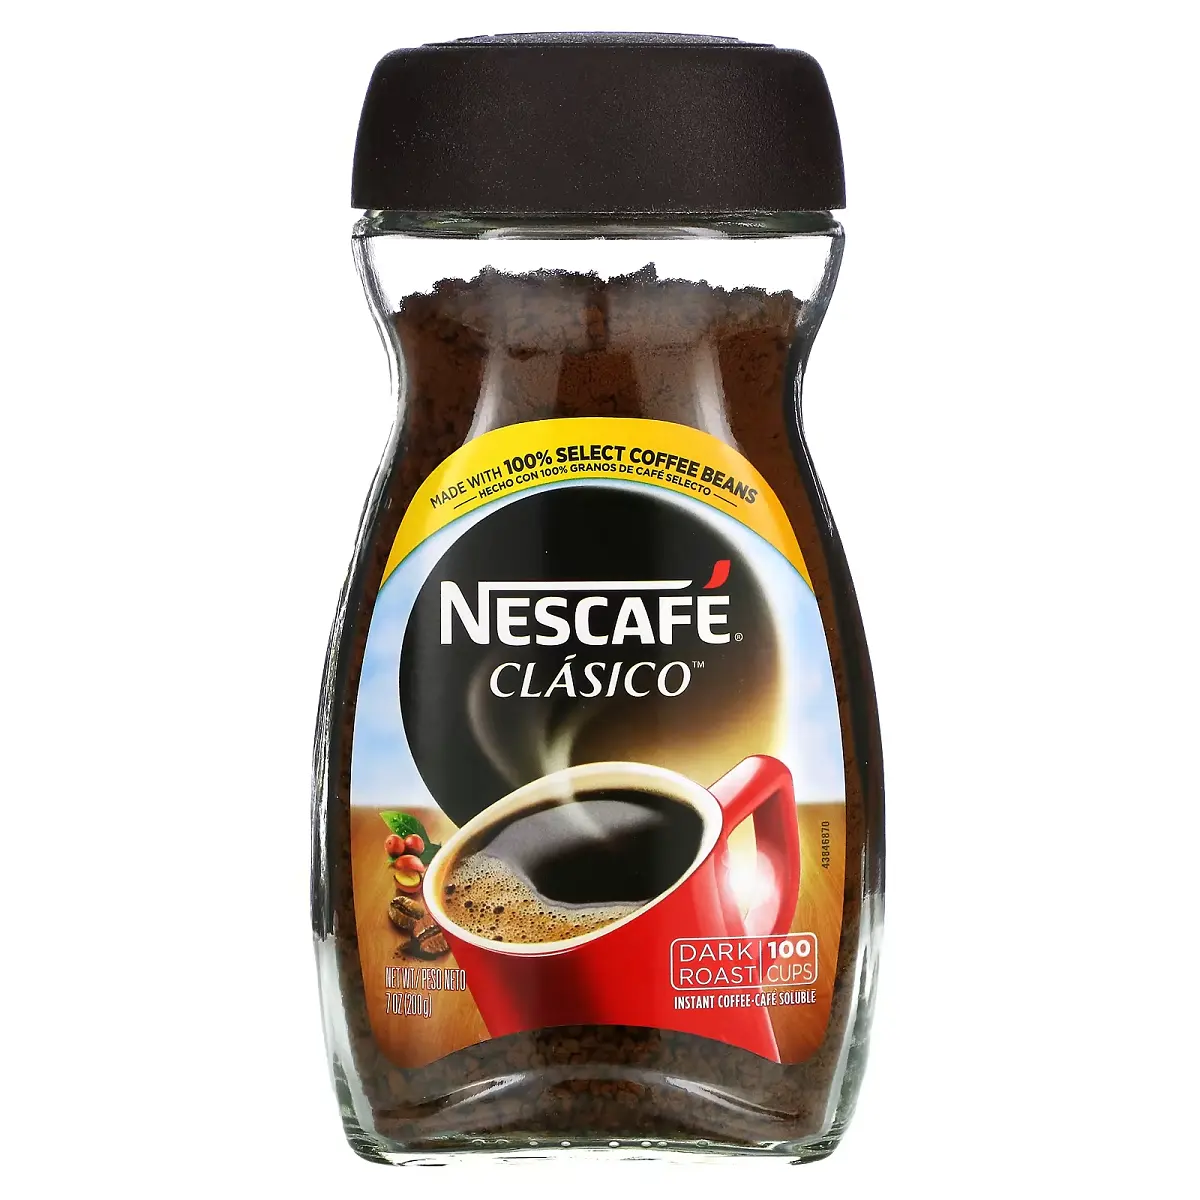 Hochwertiger Nescafé Klassiker / Reiner Instant-Nescafé-Kaffee zu günstigem Preis Hersteller aus Deutschland exportiert weltweit